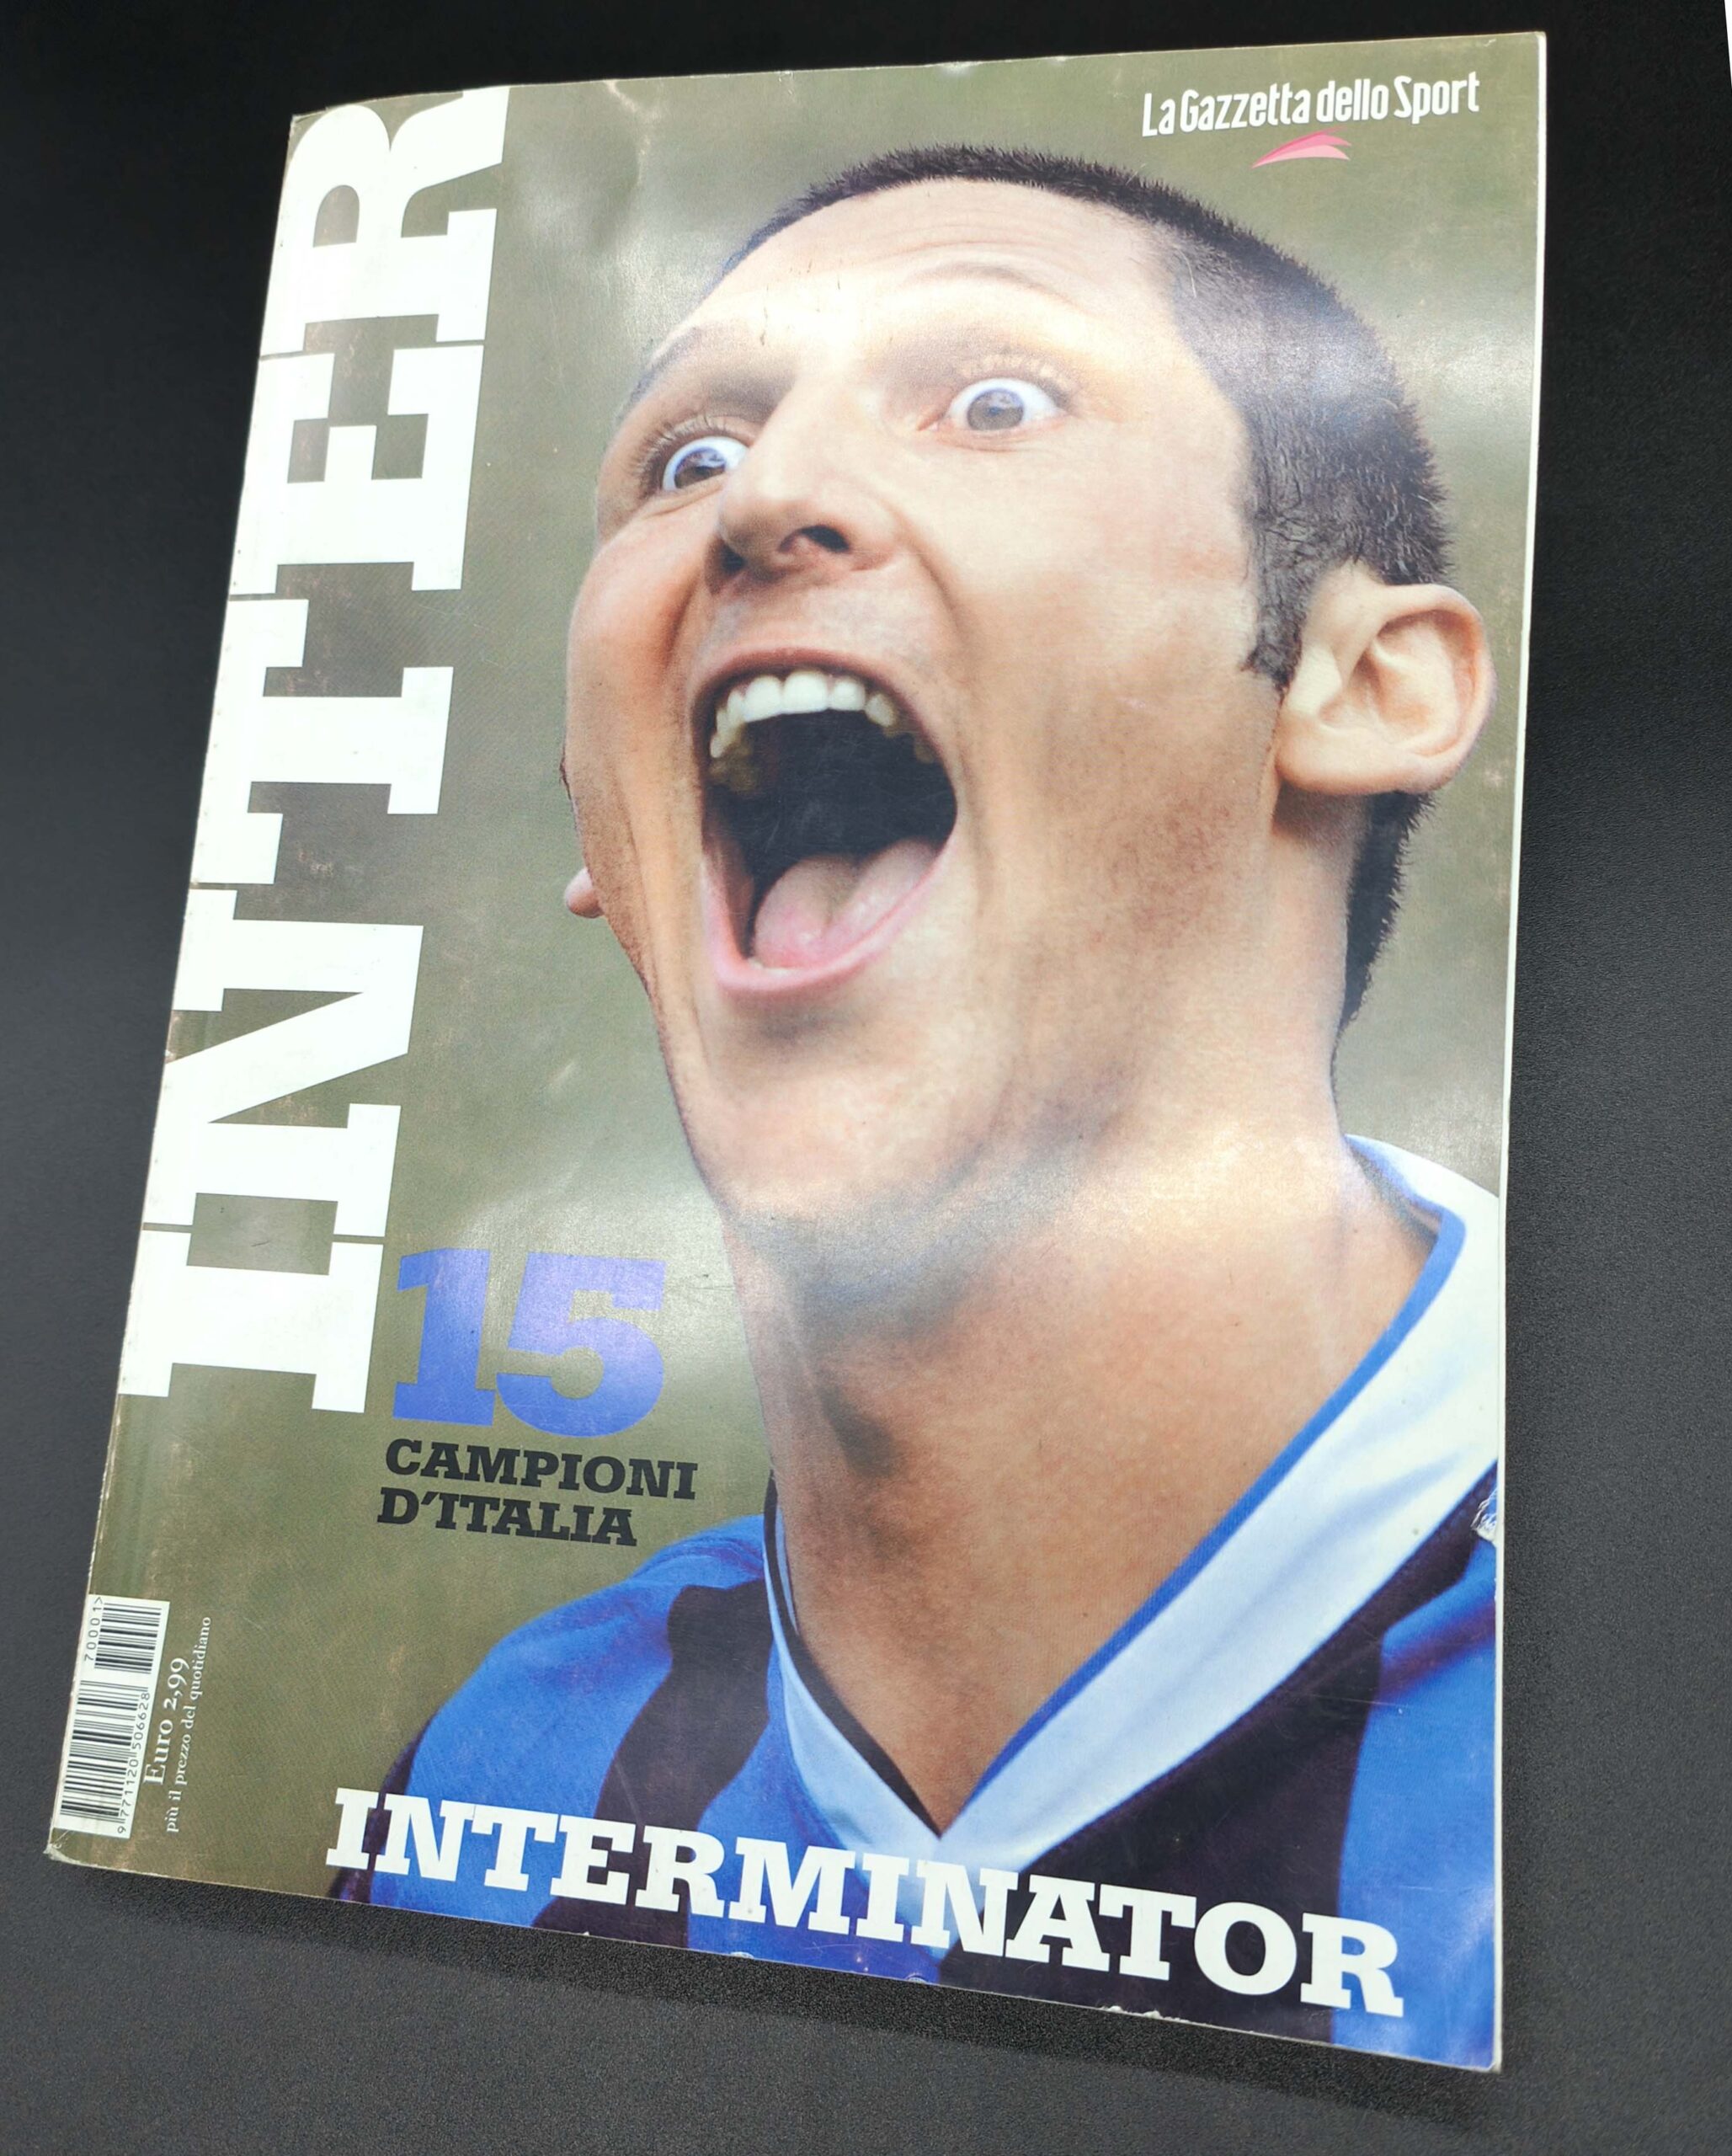 Inter rivista Football Club (a scelta)